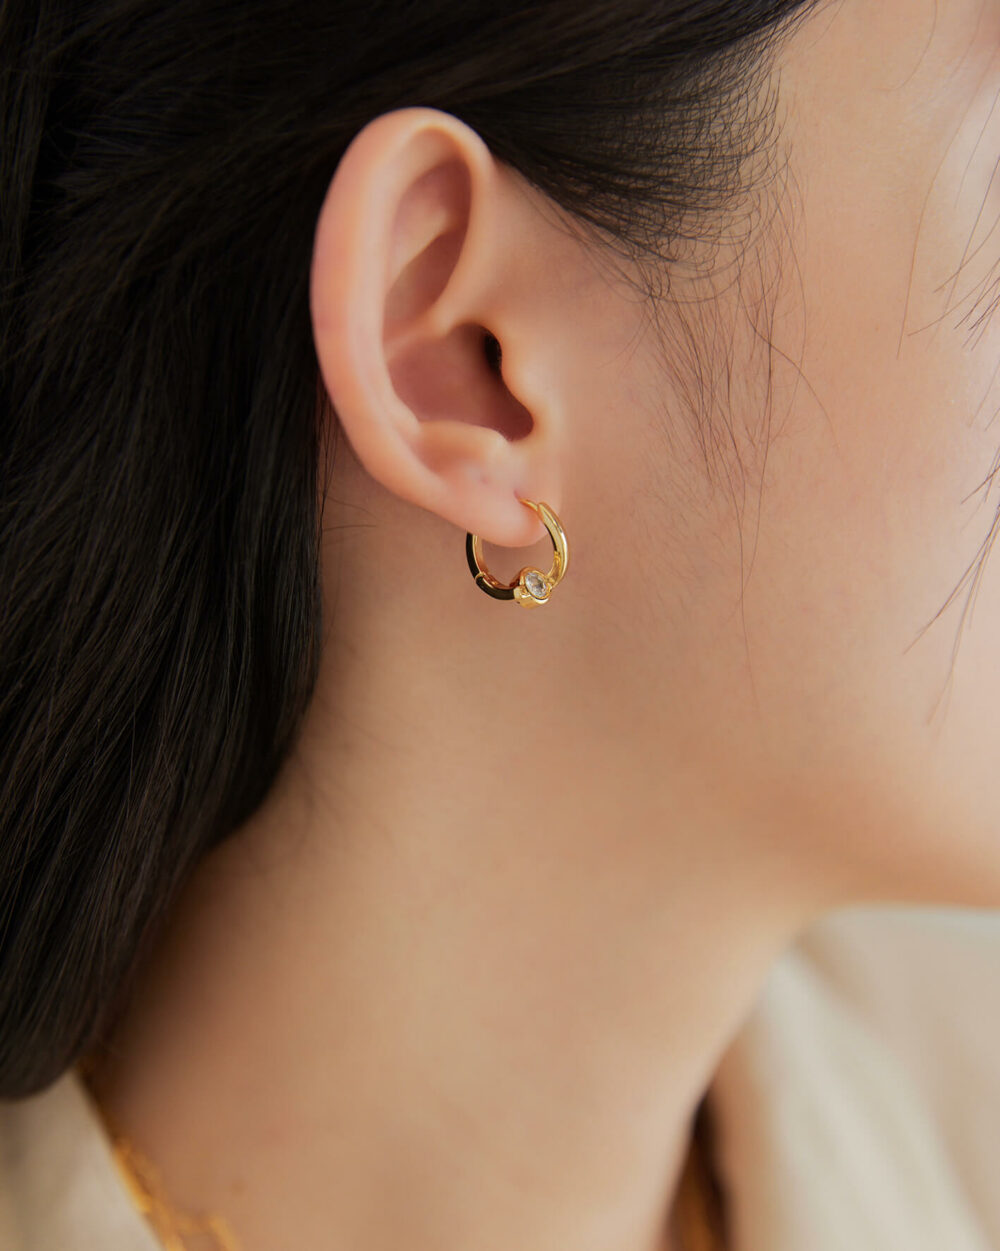 Eco安珂,韓國飾品,韓國耳環,耳針式耳環,C圈耳環,愛心耳環,鑽耳環,戴著睡覺